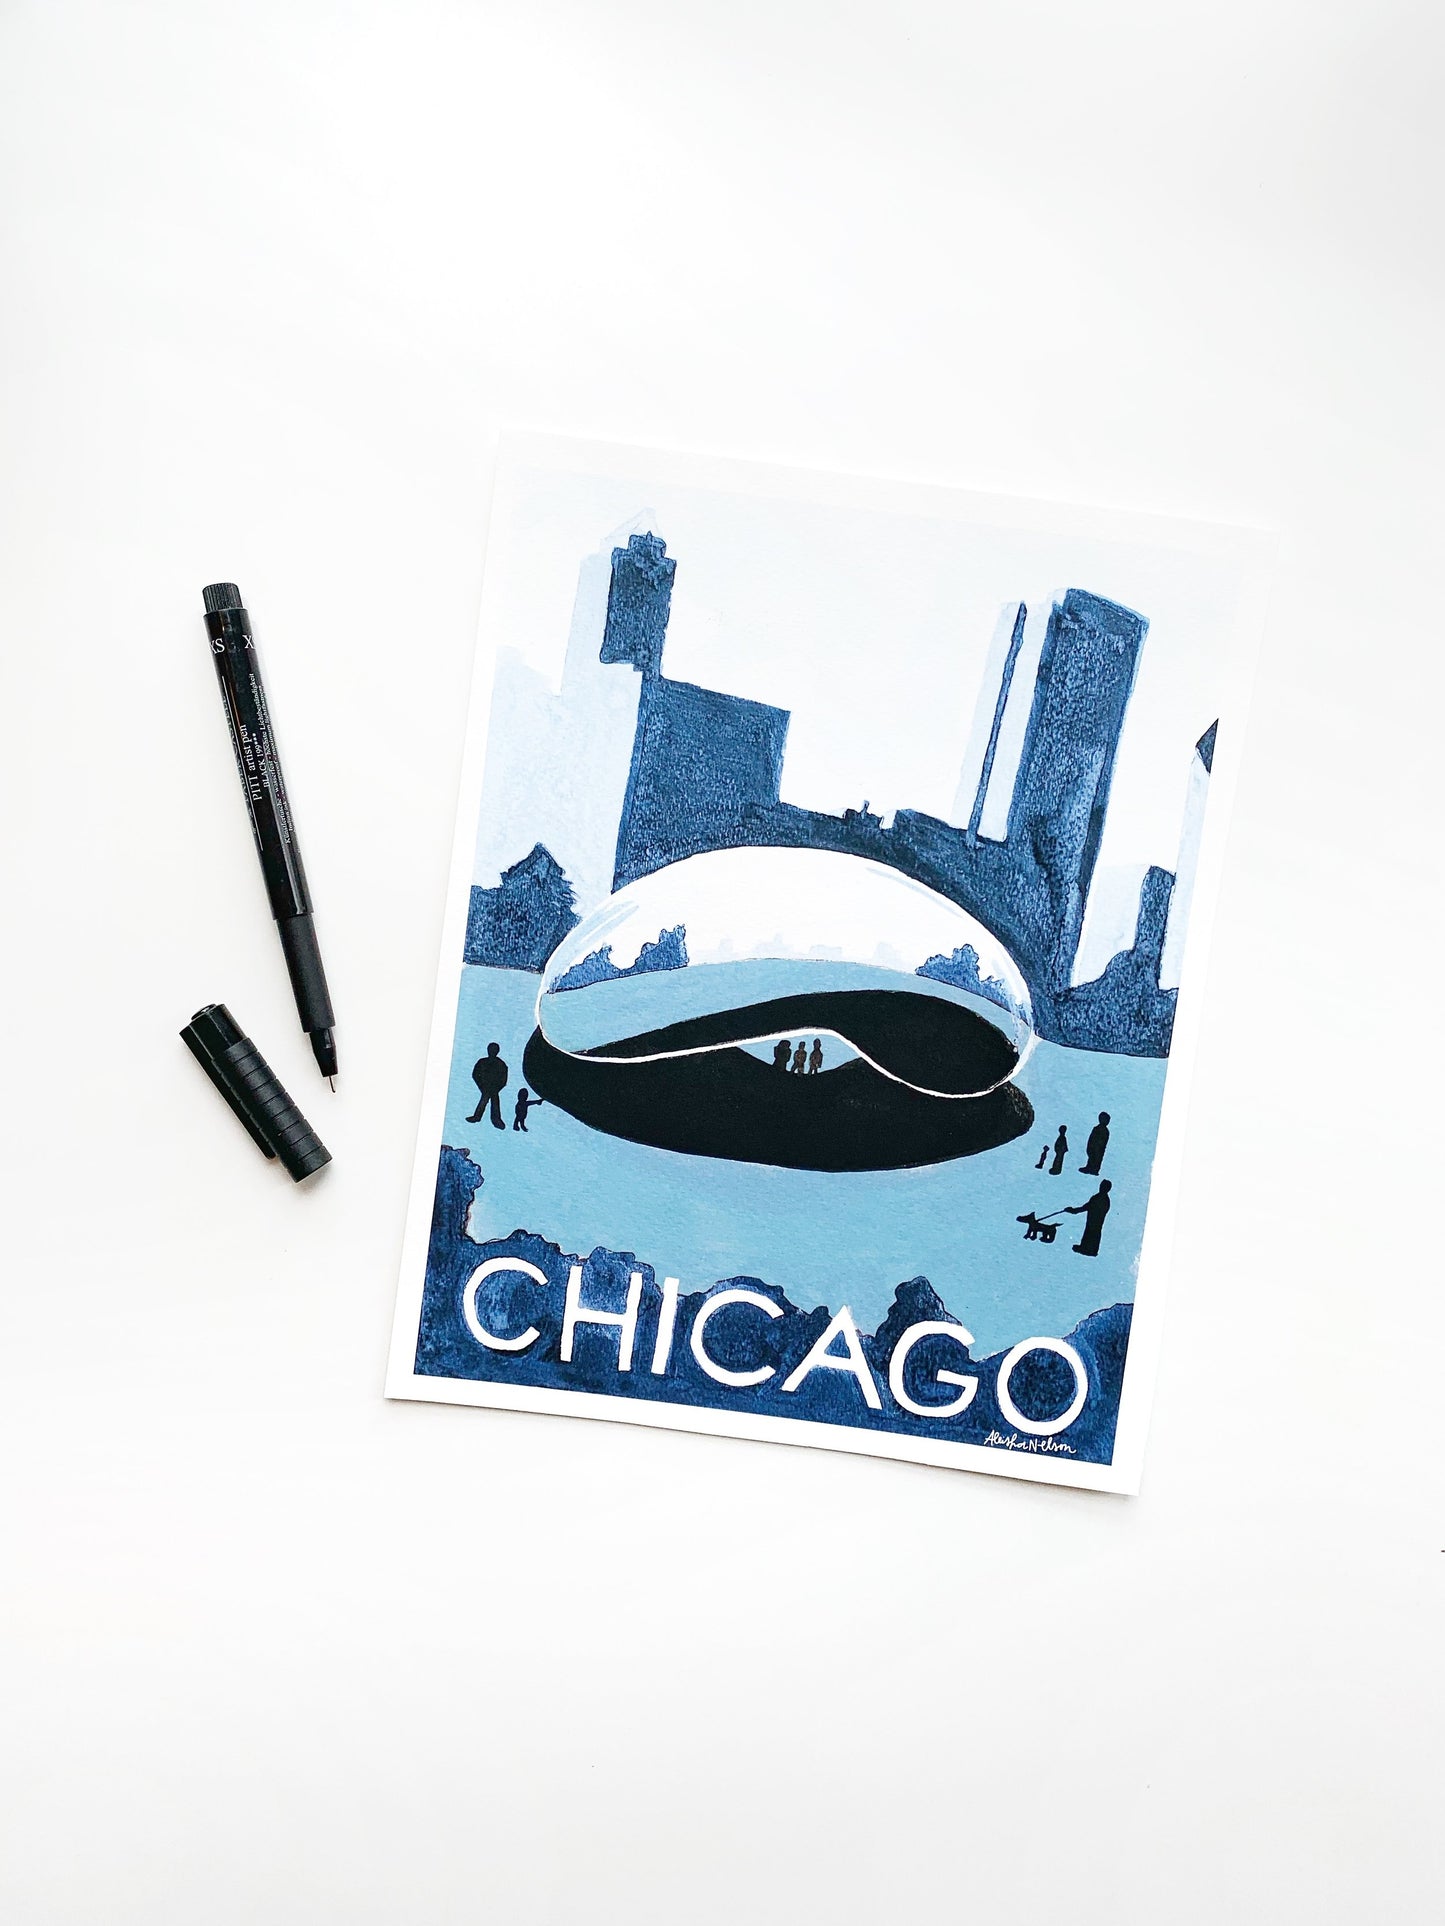 Chicago Bean Travel Poster